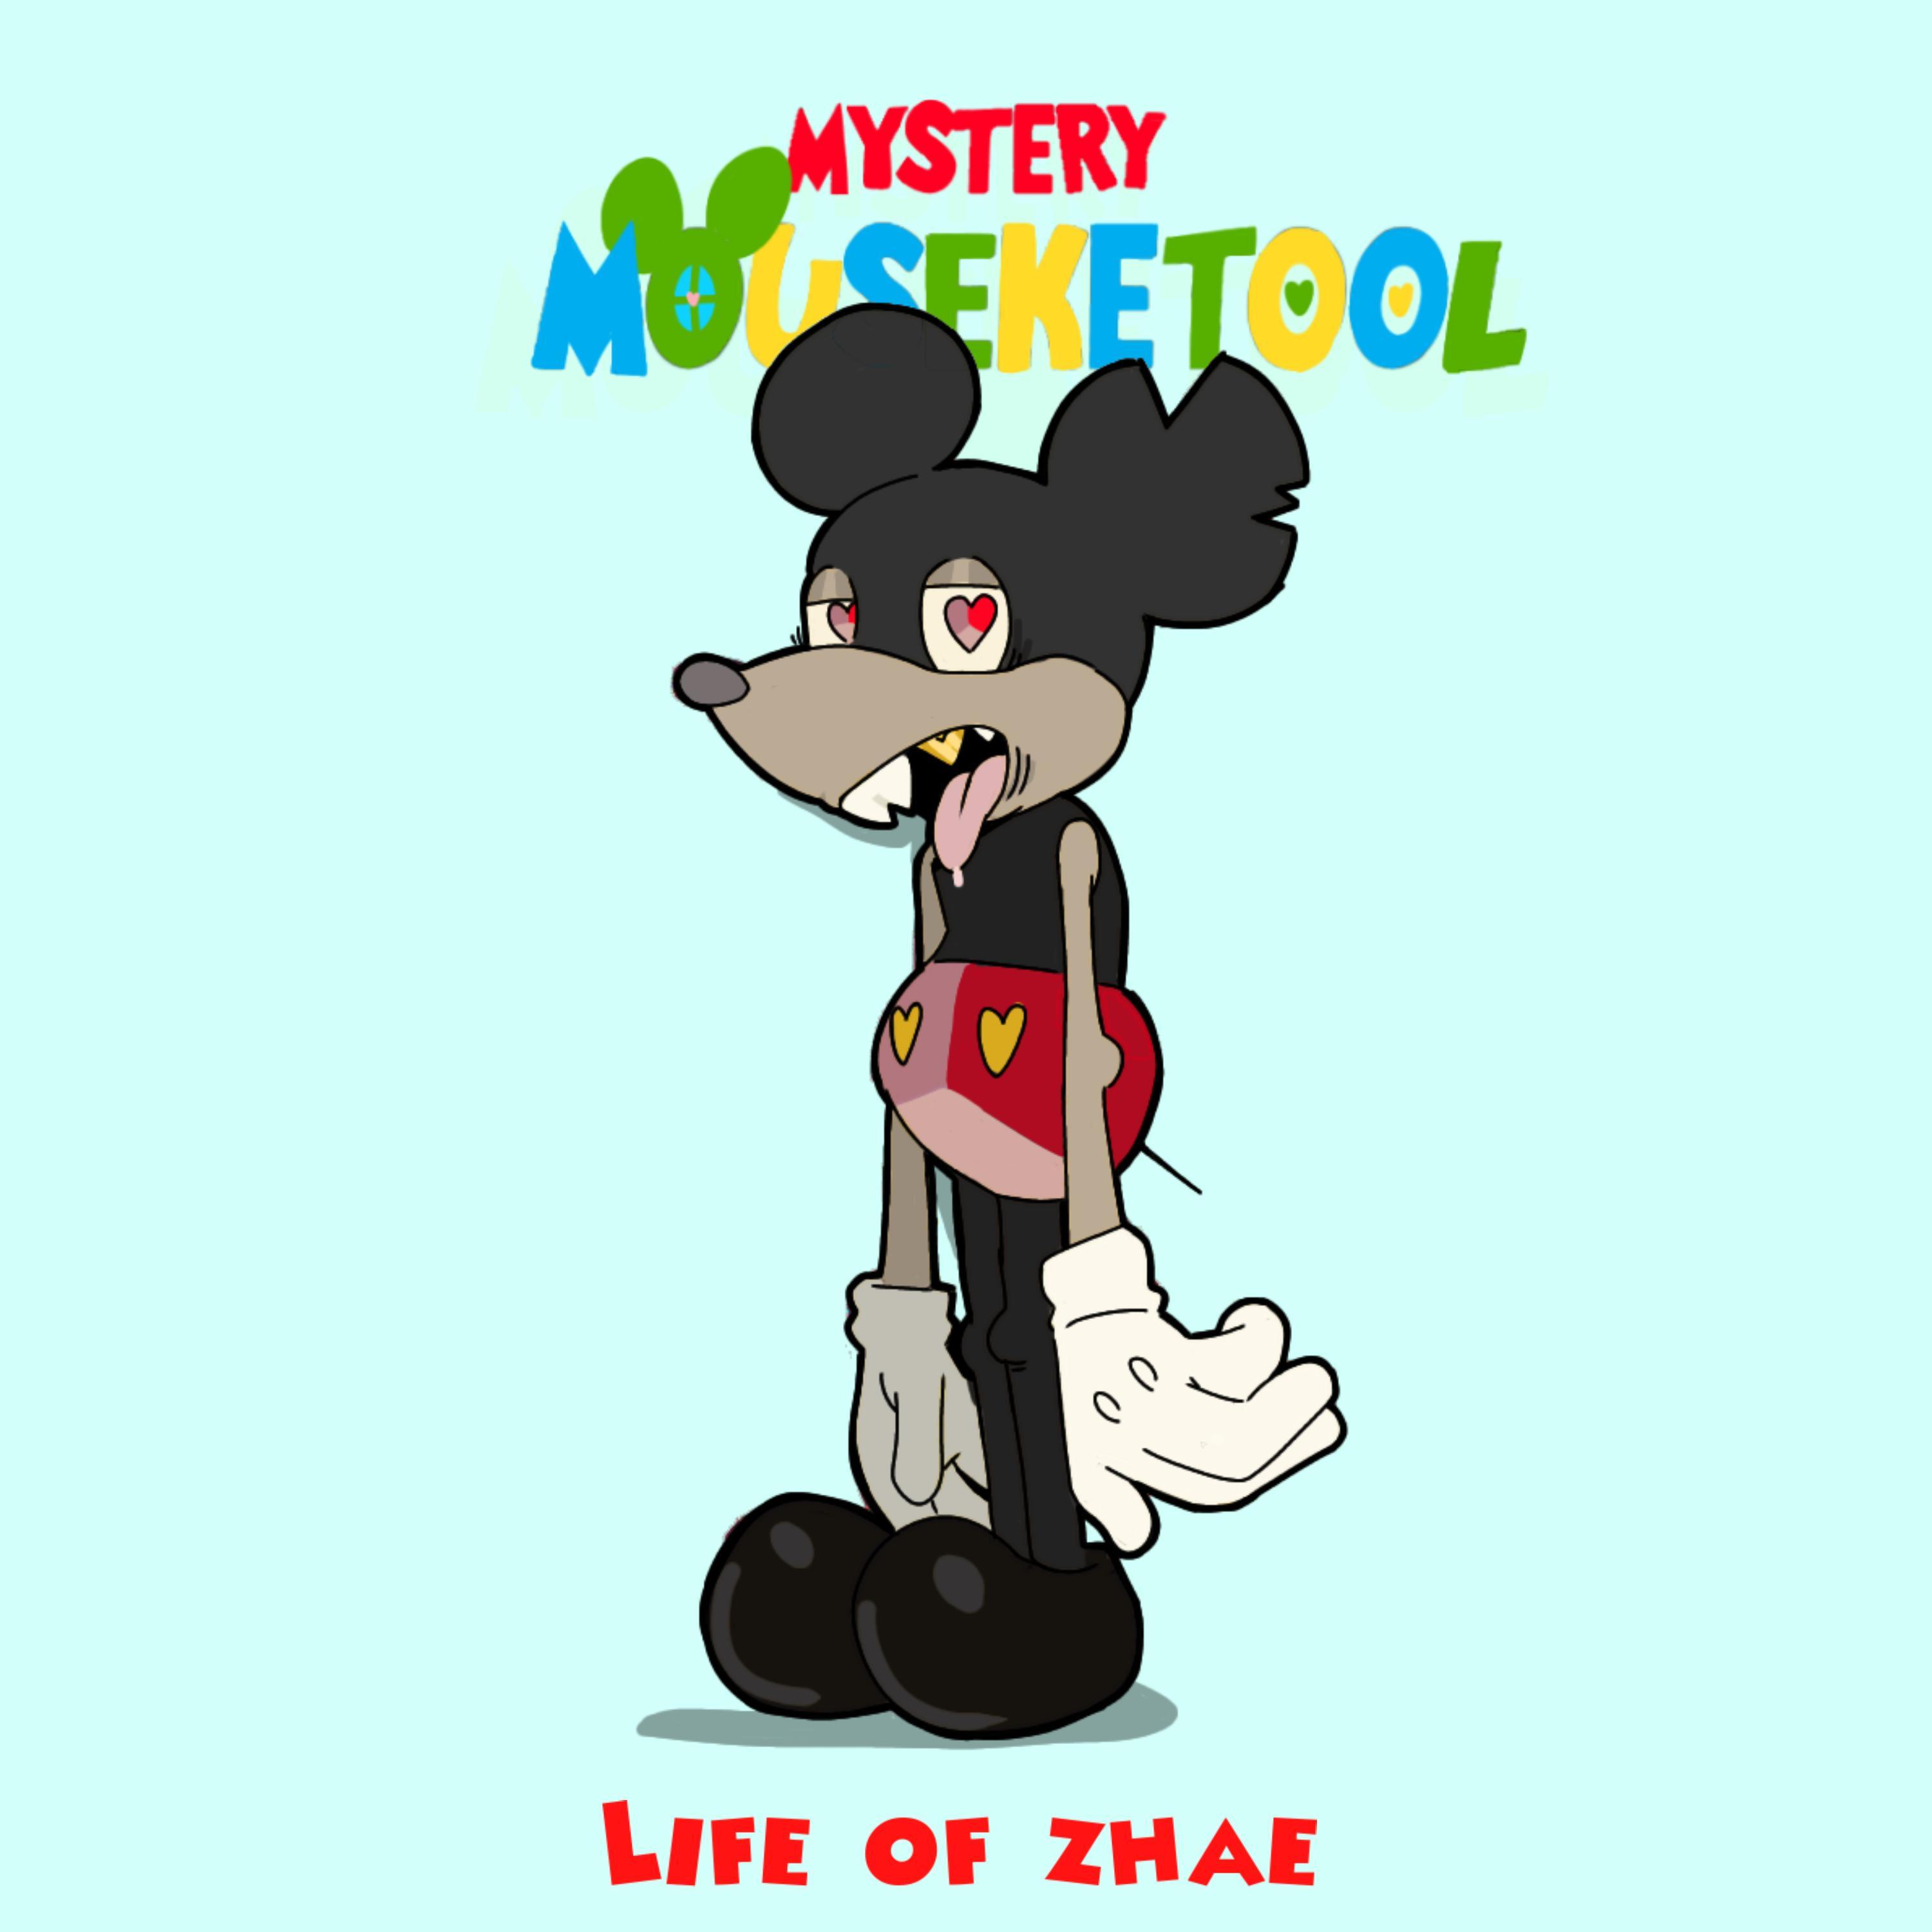 Mystery mouseketool meme